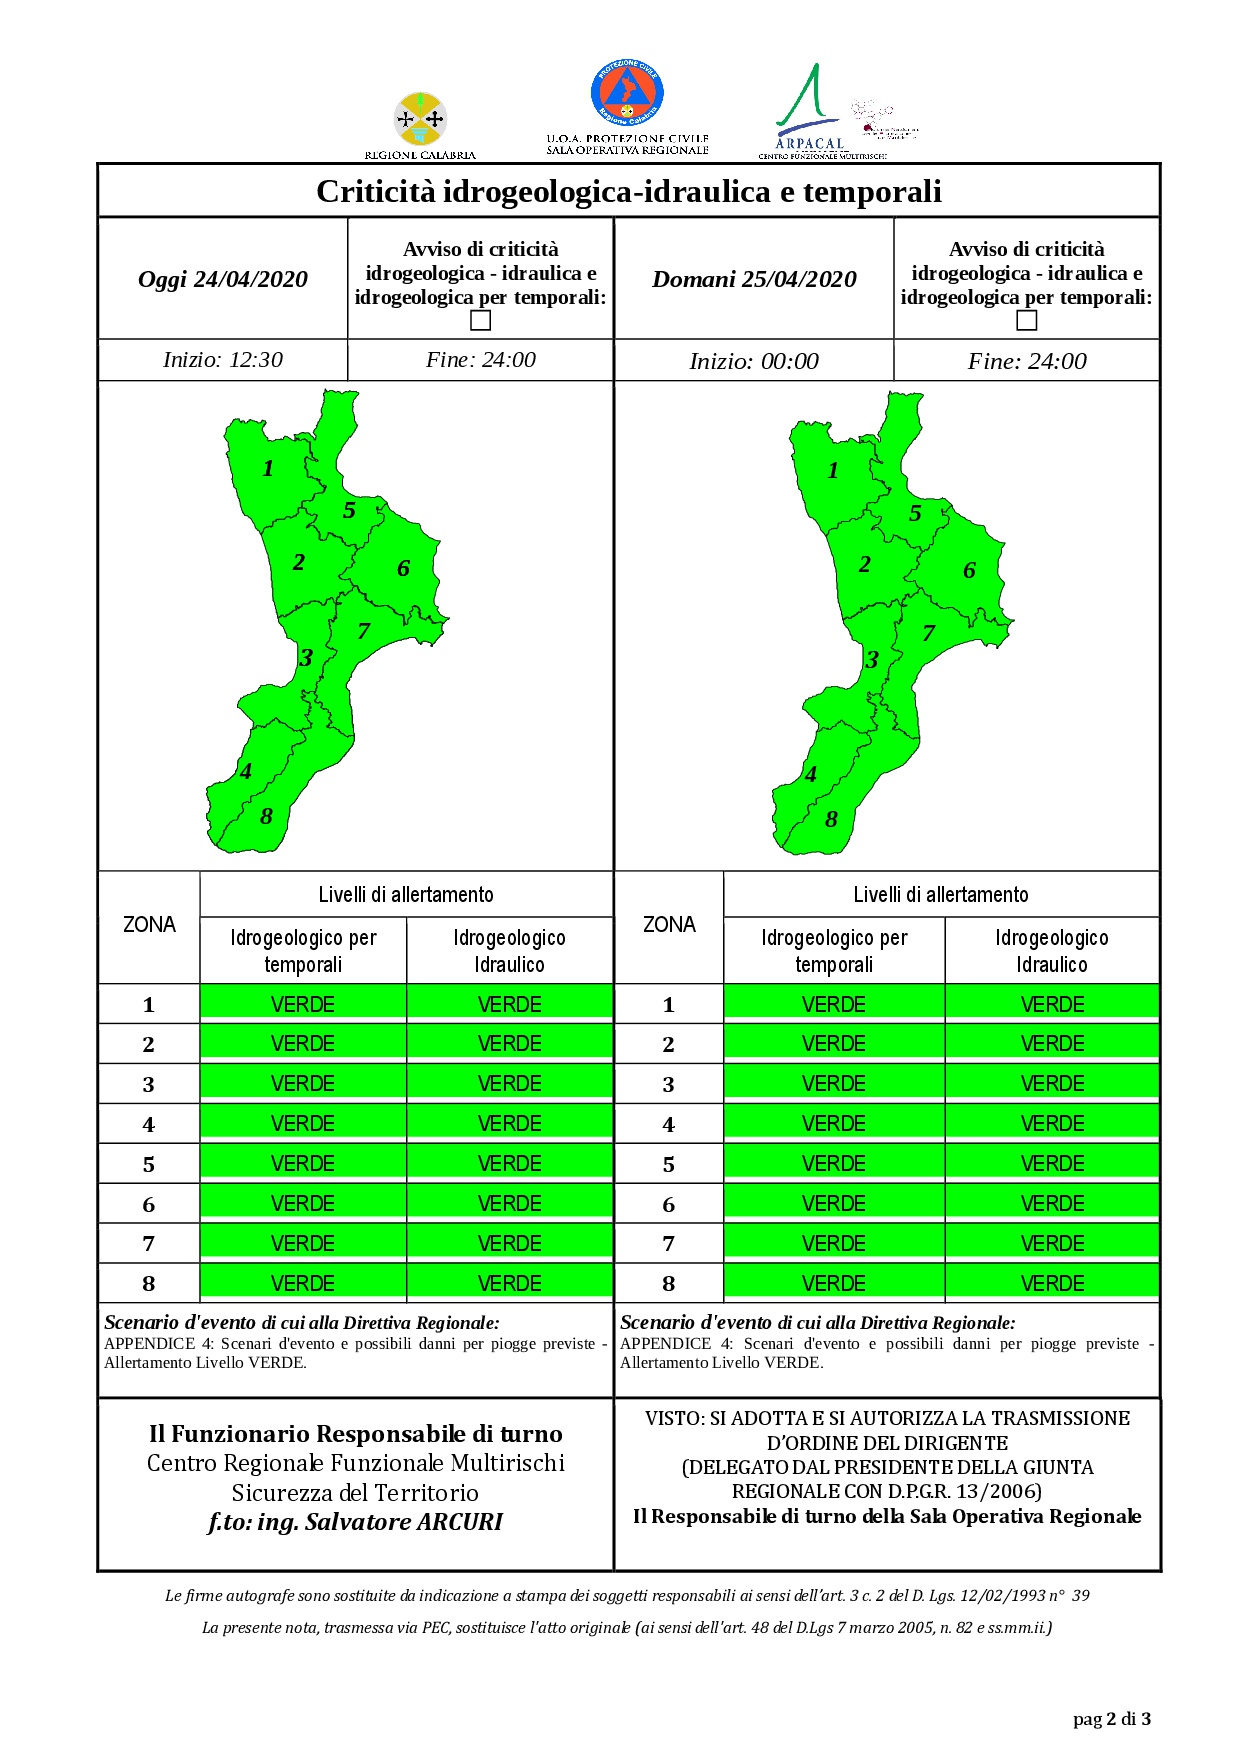 Criticità idrogeologica-idraulica e temporali in Calabria 24-04-2020